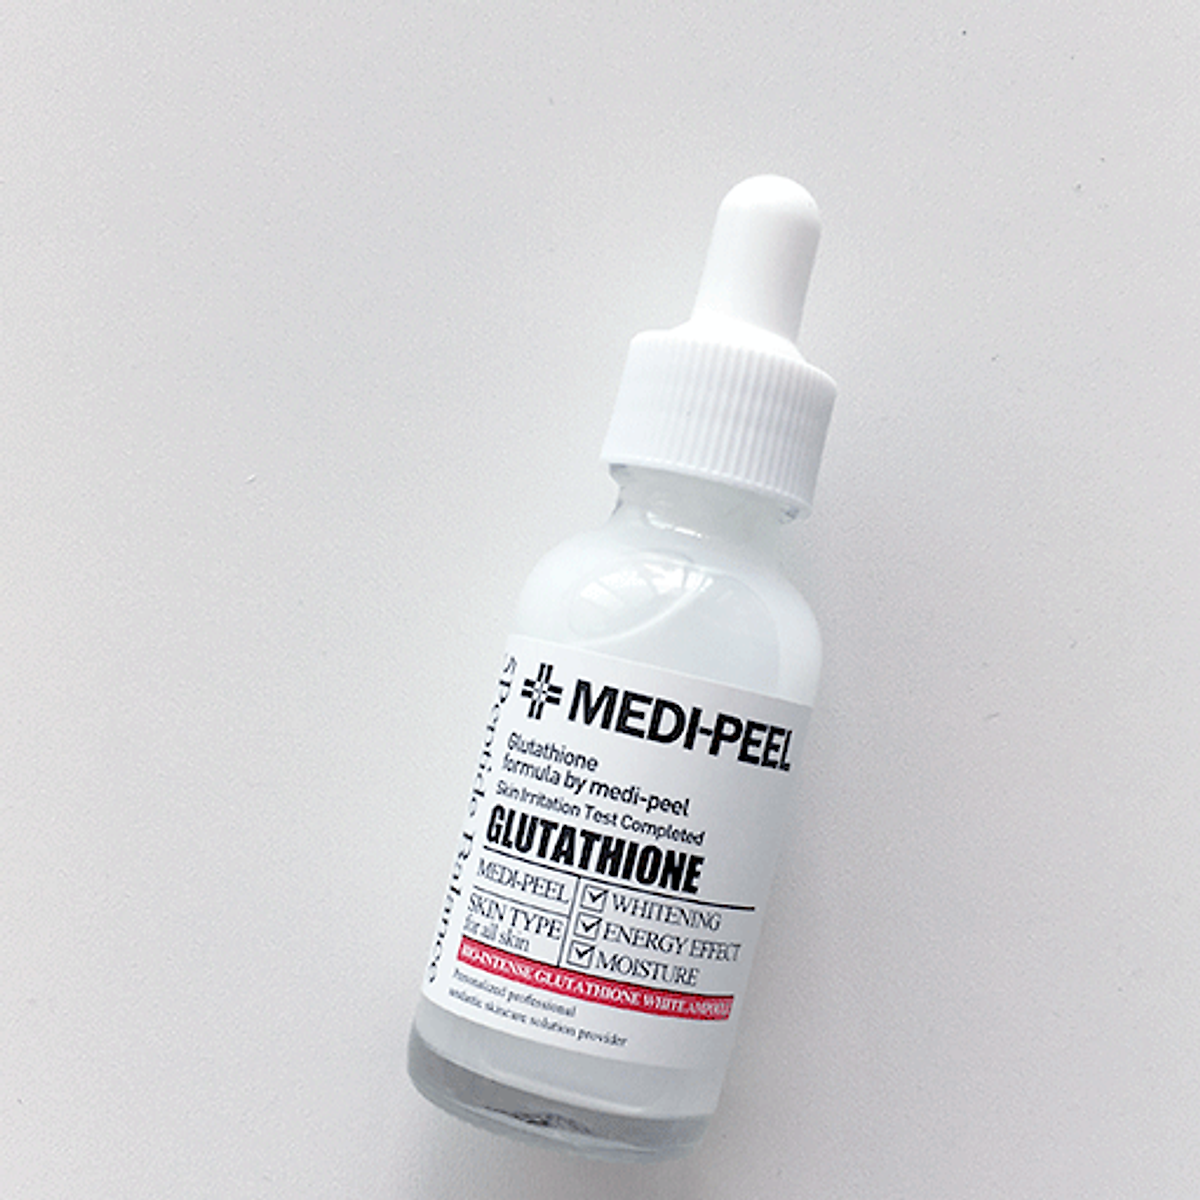 Tinh Chất Dưỡng Trắng Medi-Peel Bio-Intense Gluthione White Ampoule 30ml - Hàn Quốc